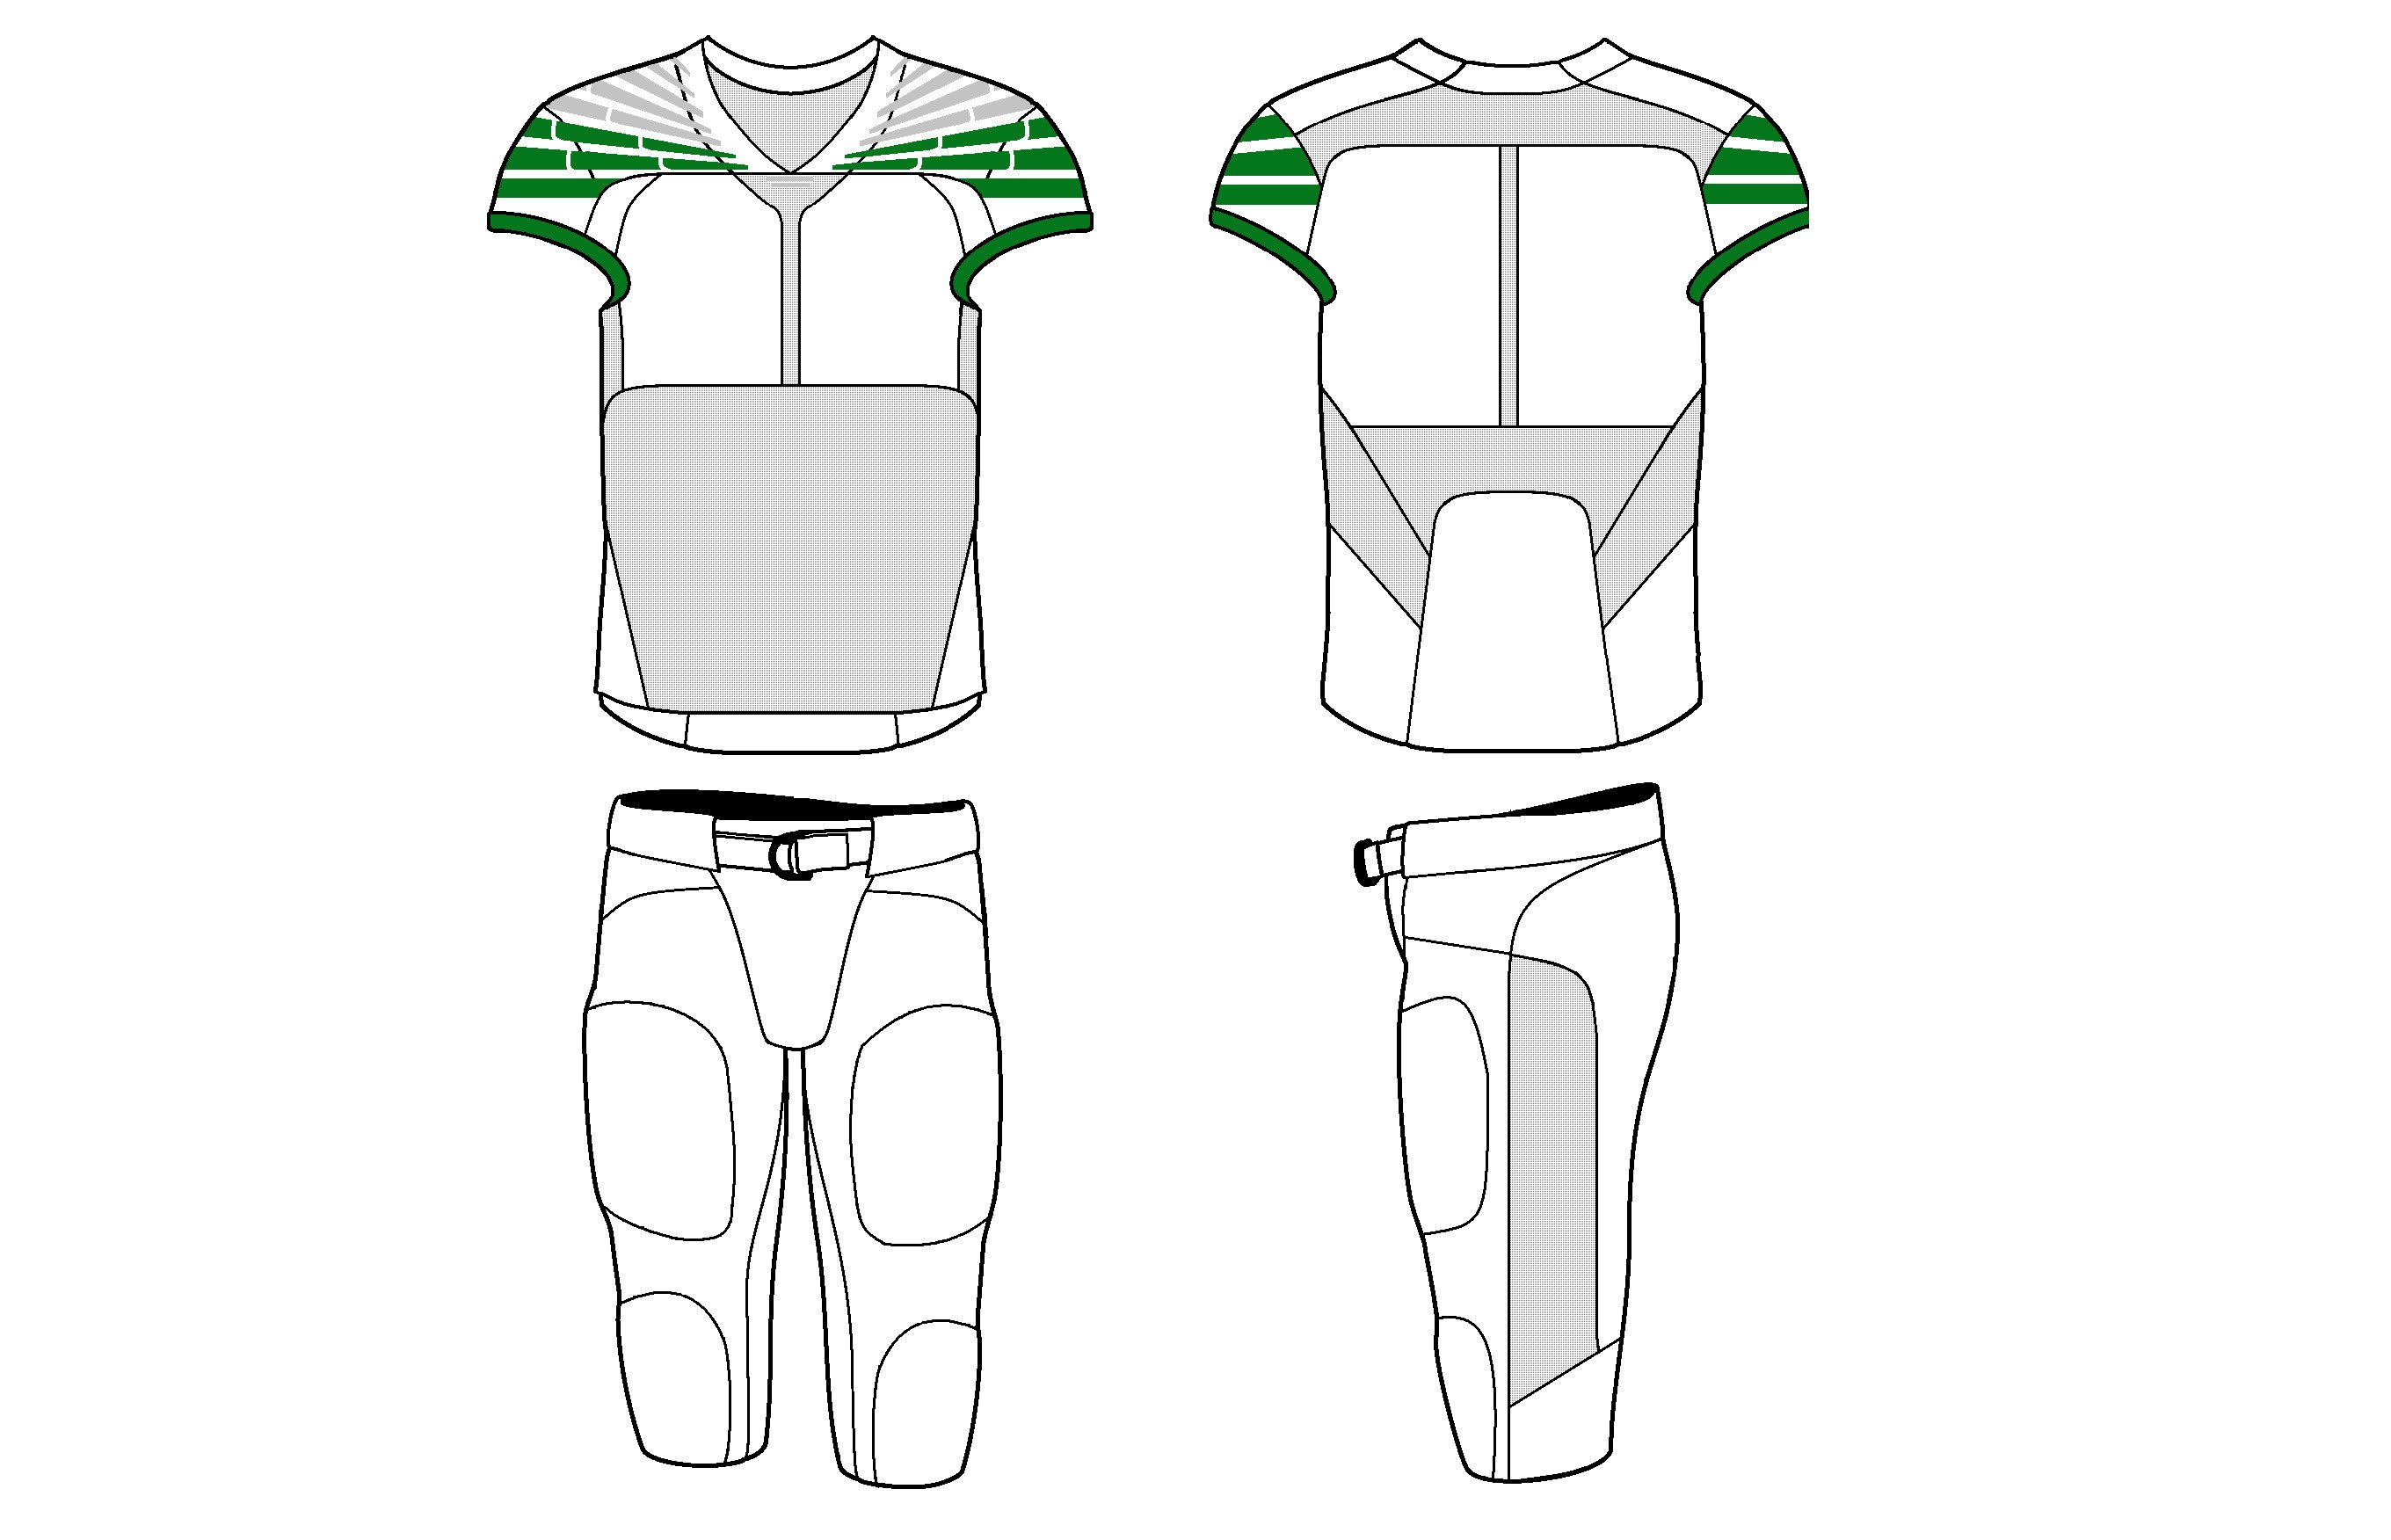 Evolution of Nike college football uniforms Land Grant